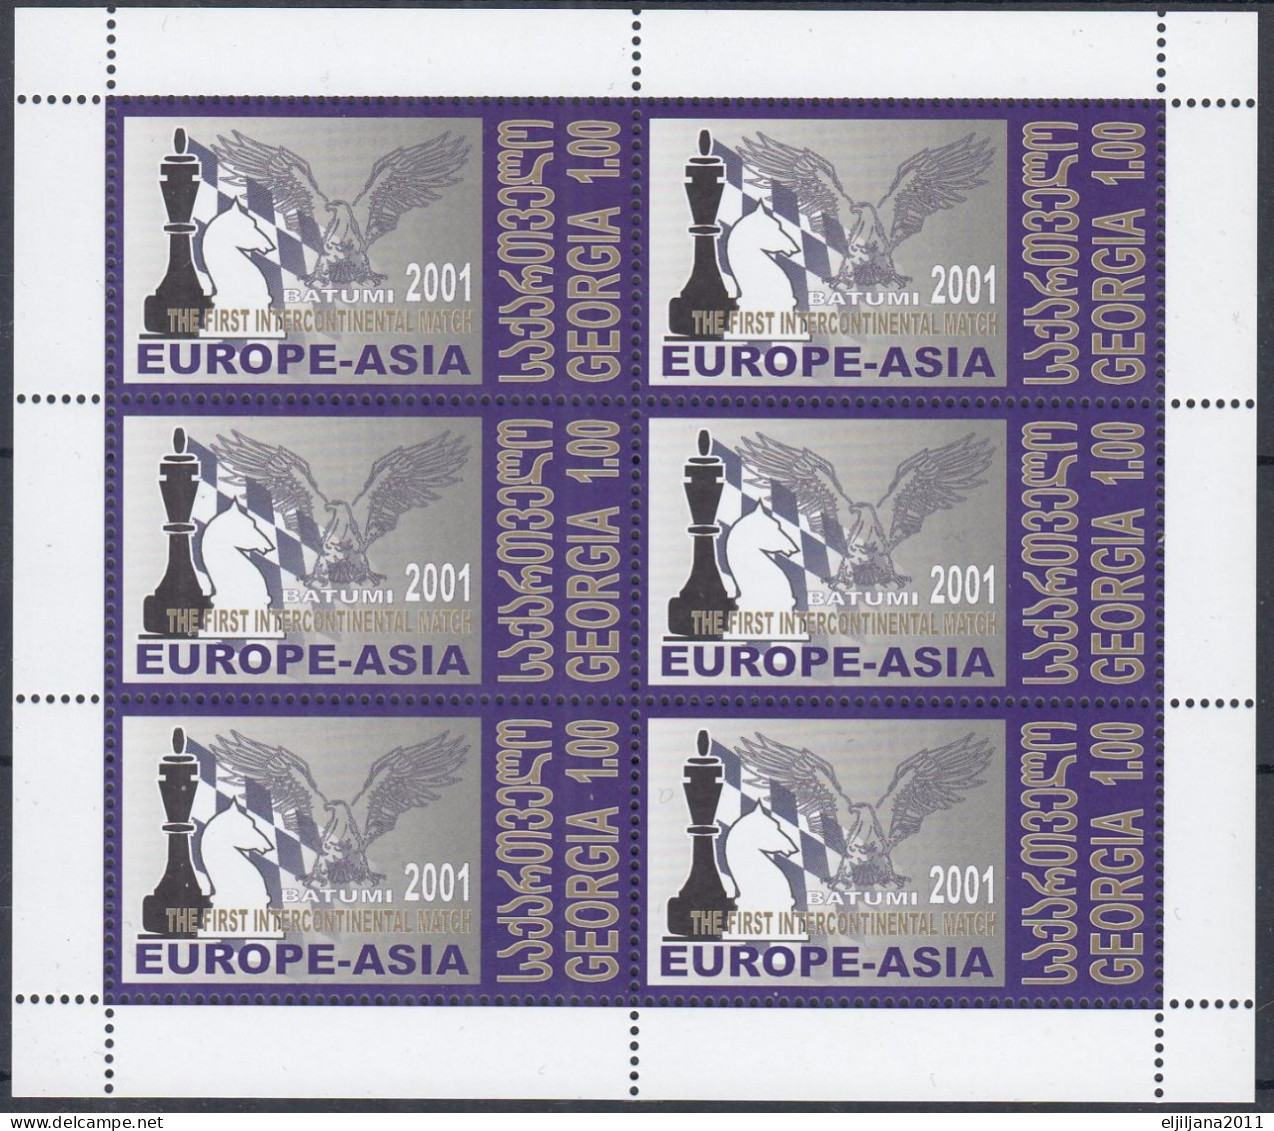 ⁕ GEORGIA 2001 ⁕ FIRST CHESS INTERNATIONAL MATCH EUROPE-ASIA BATUMI Mi.379 ⁕ MNH Block - Géorgie